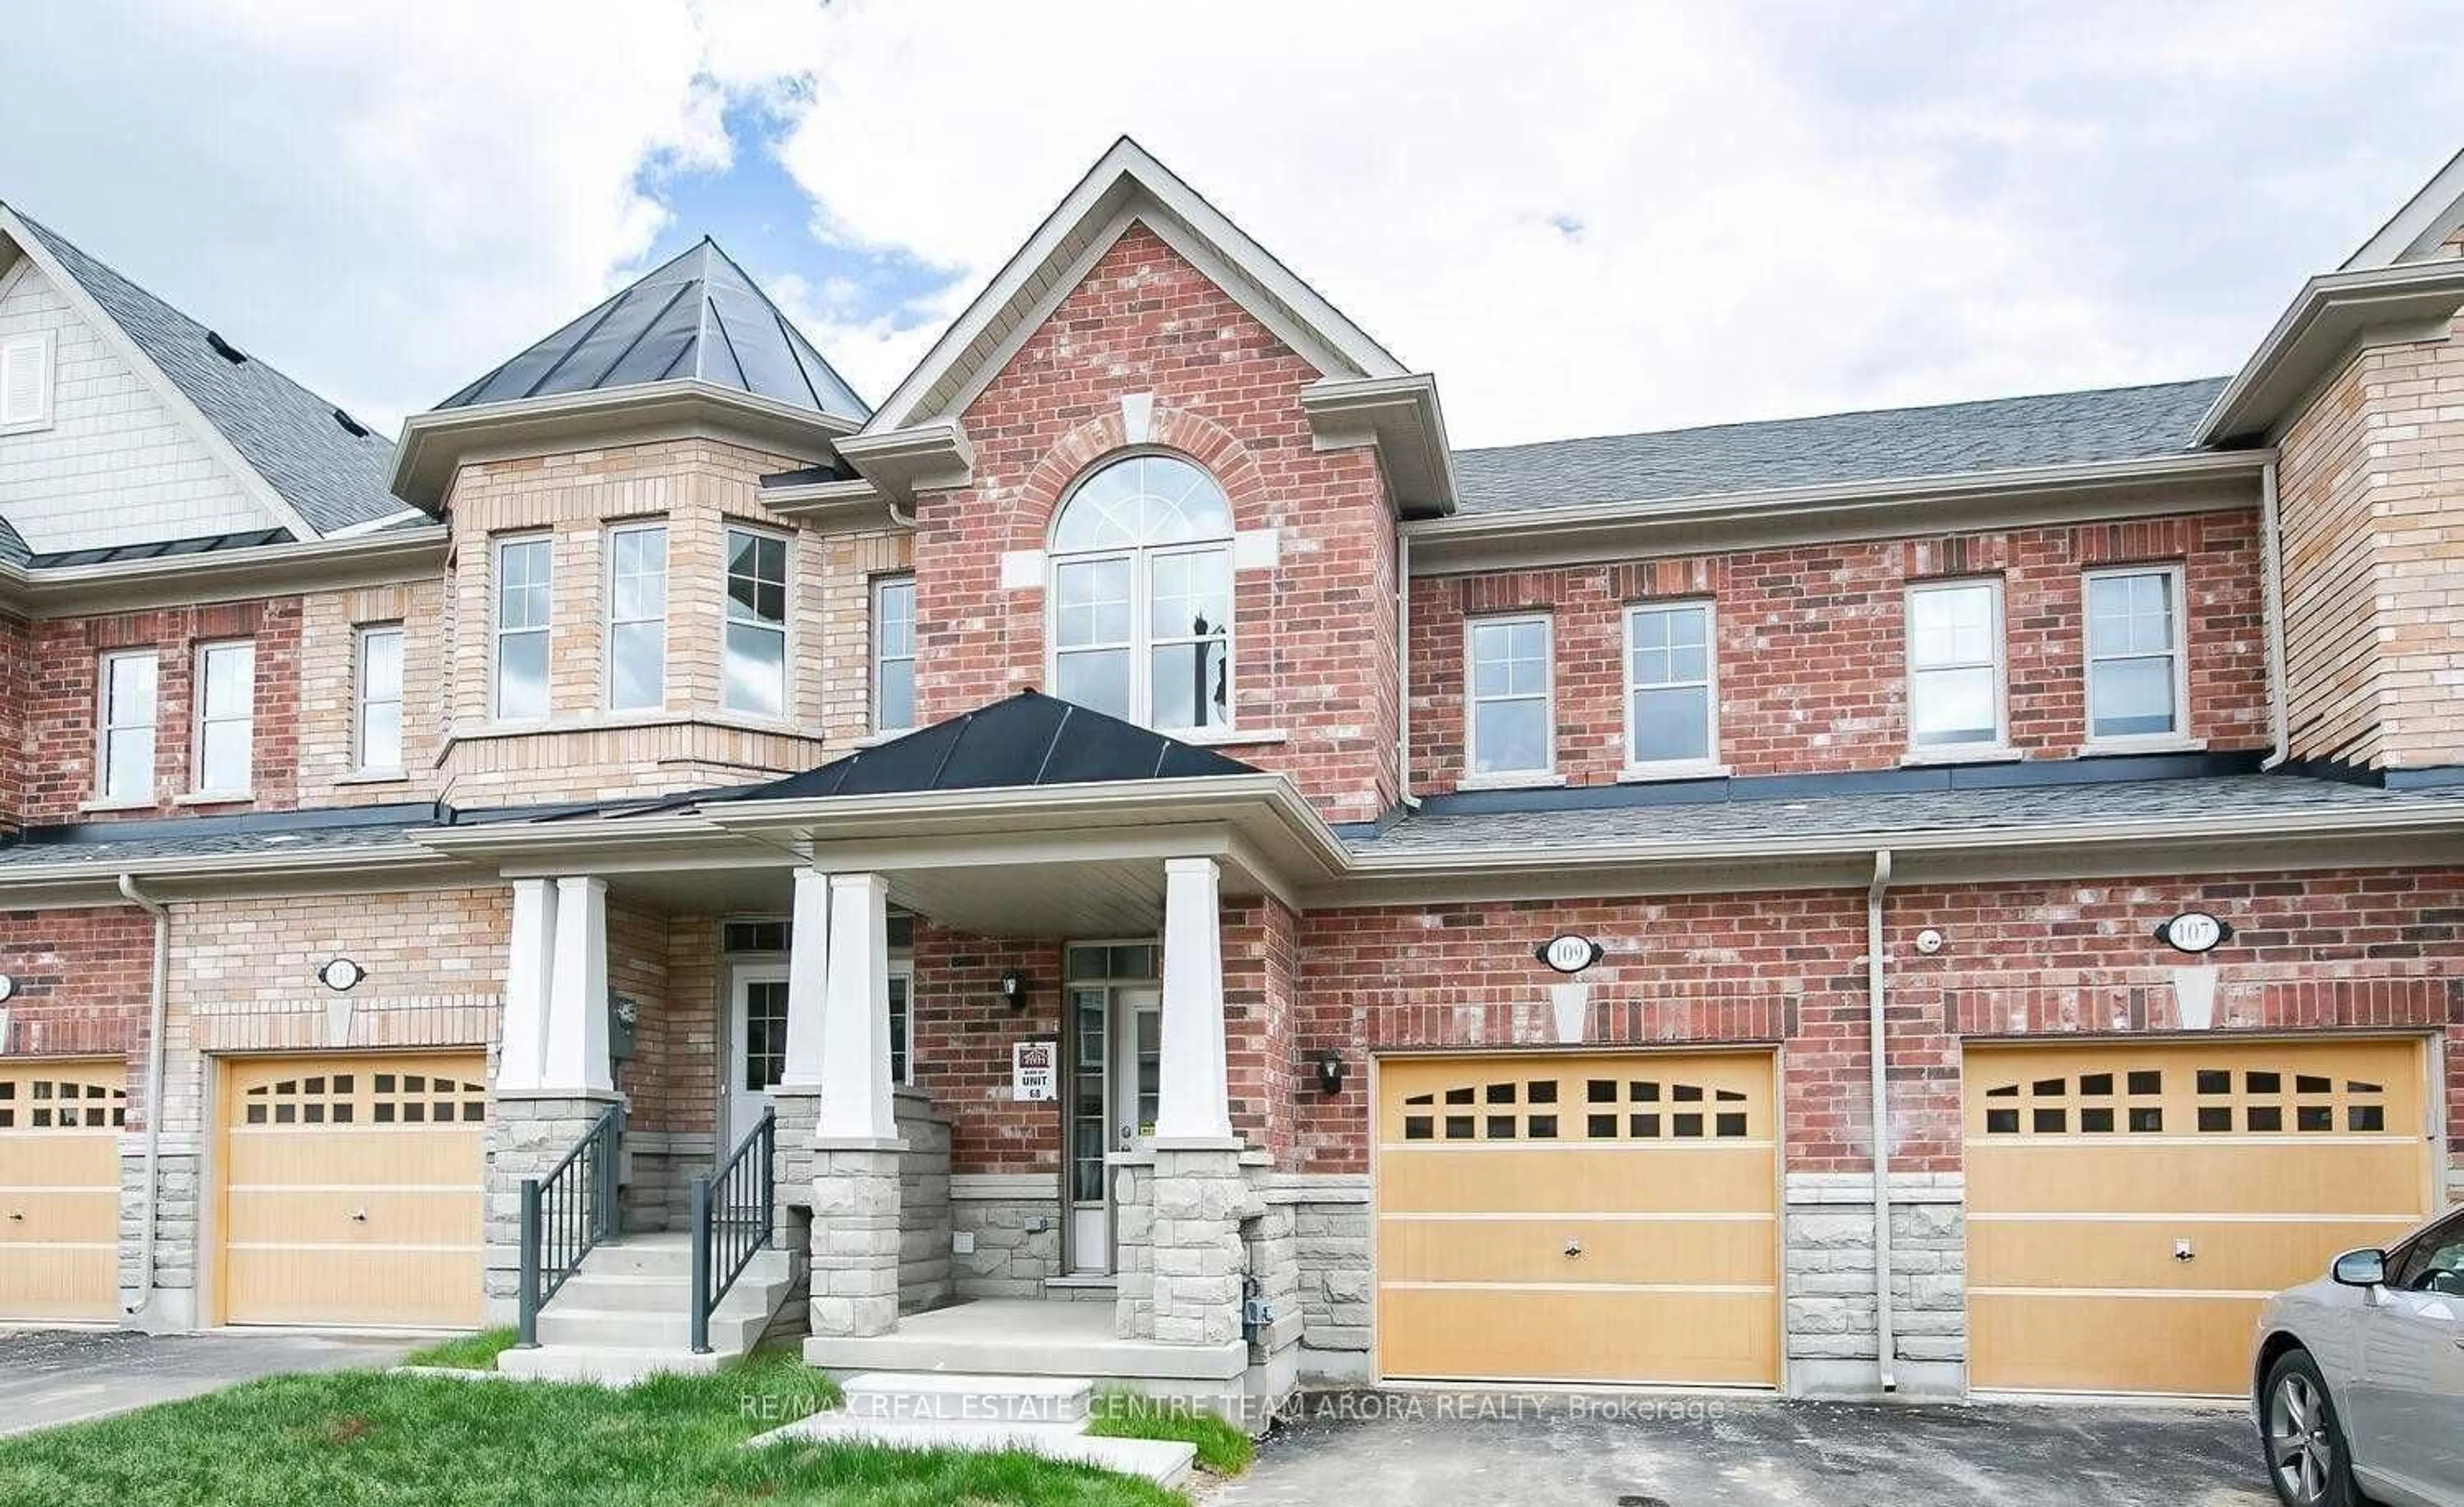 Home with brick exterior material for 109 Finegan Circ, Brampton Ontario L7A 4Z9